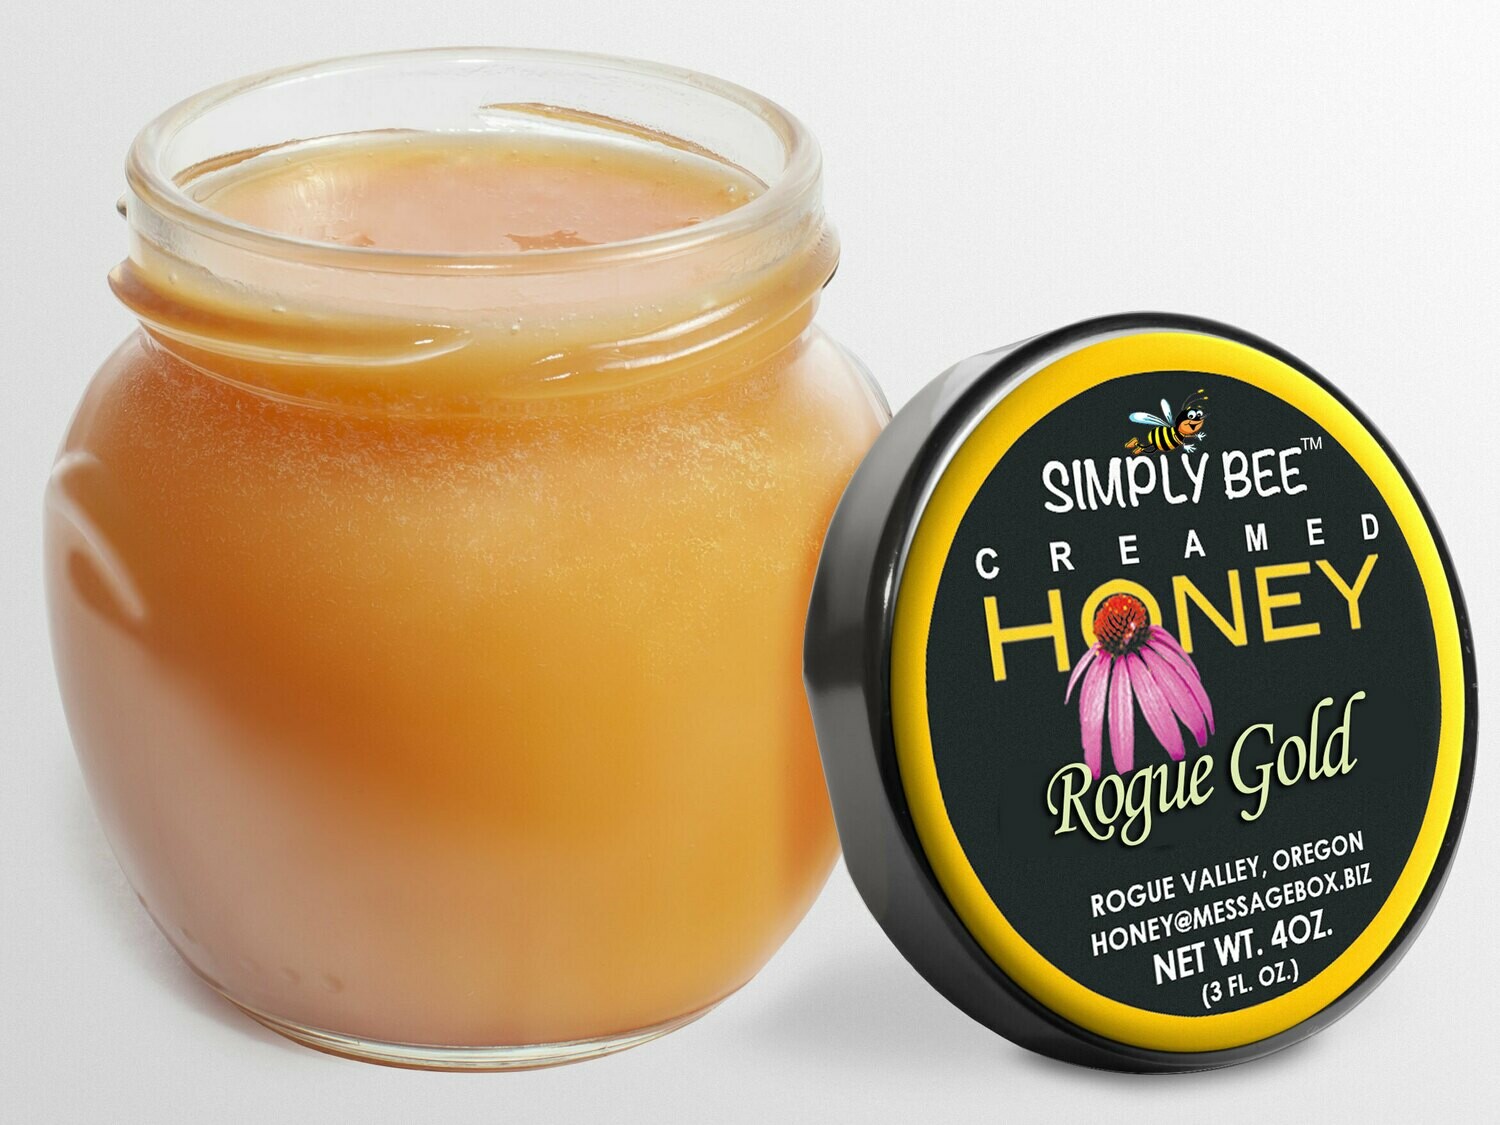 Rogue Gold Creamed Honey